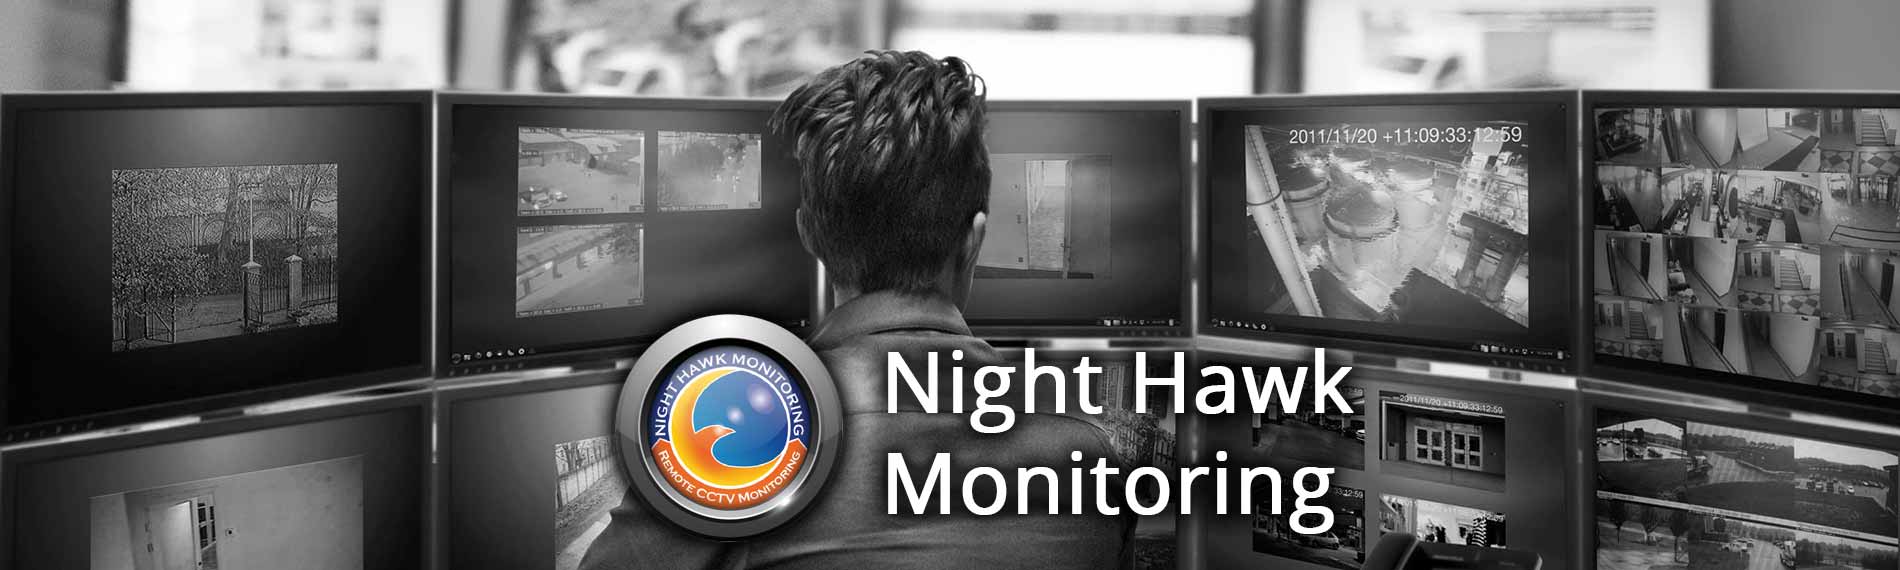 Remote Video Surveillance Omaha - Live Security Cameras Monitoring Omaha NE